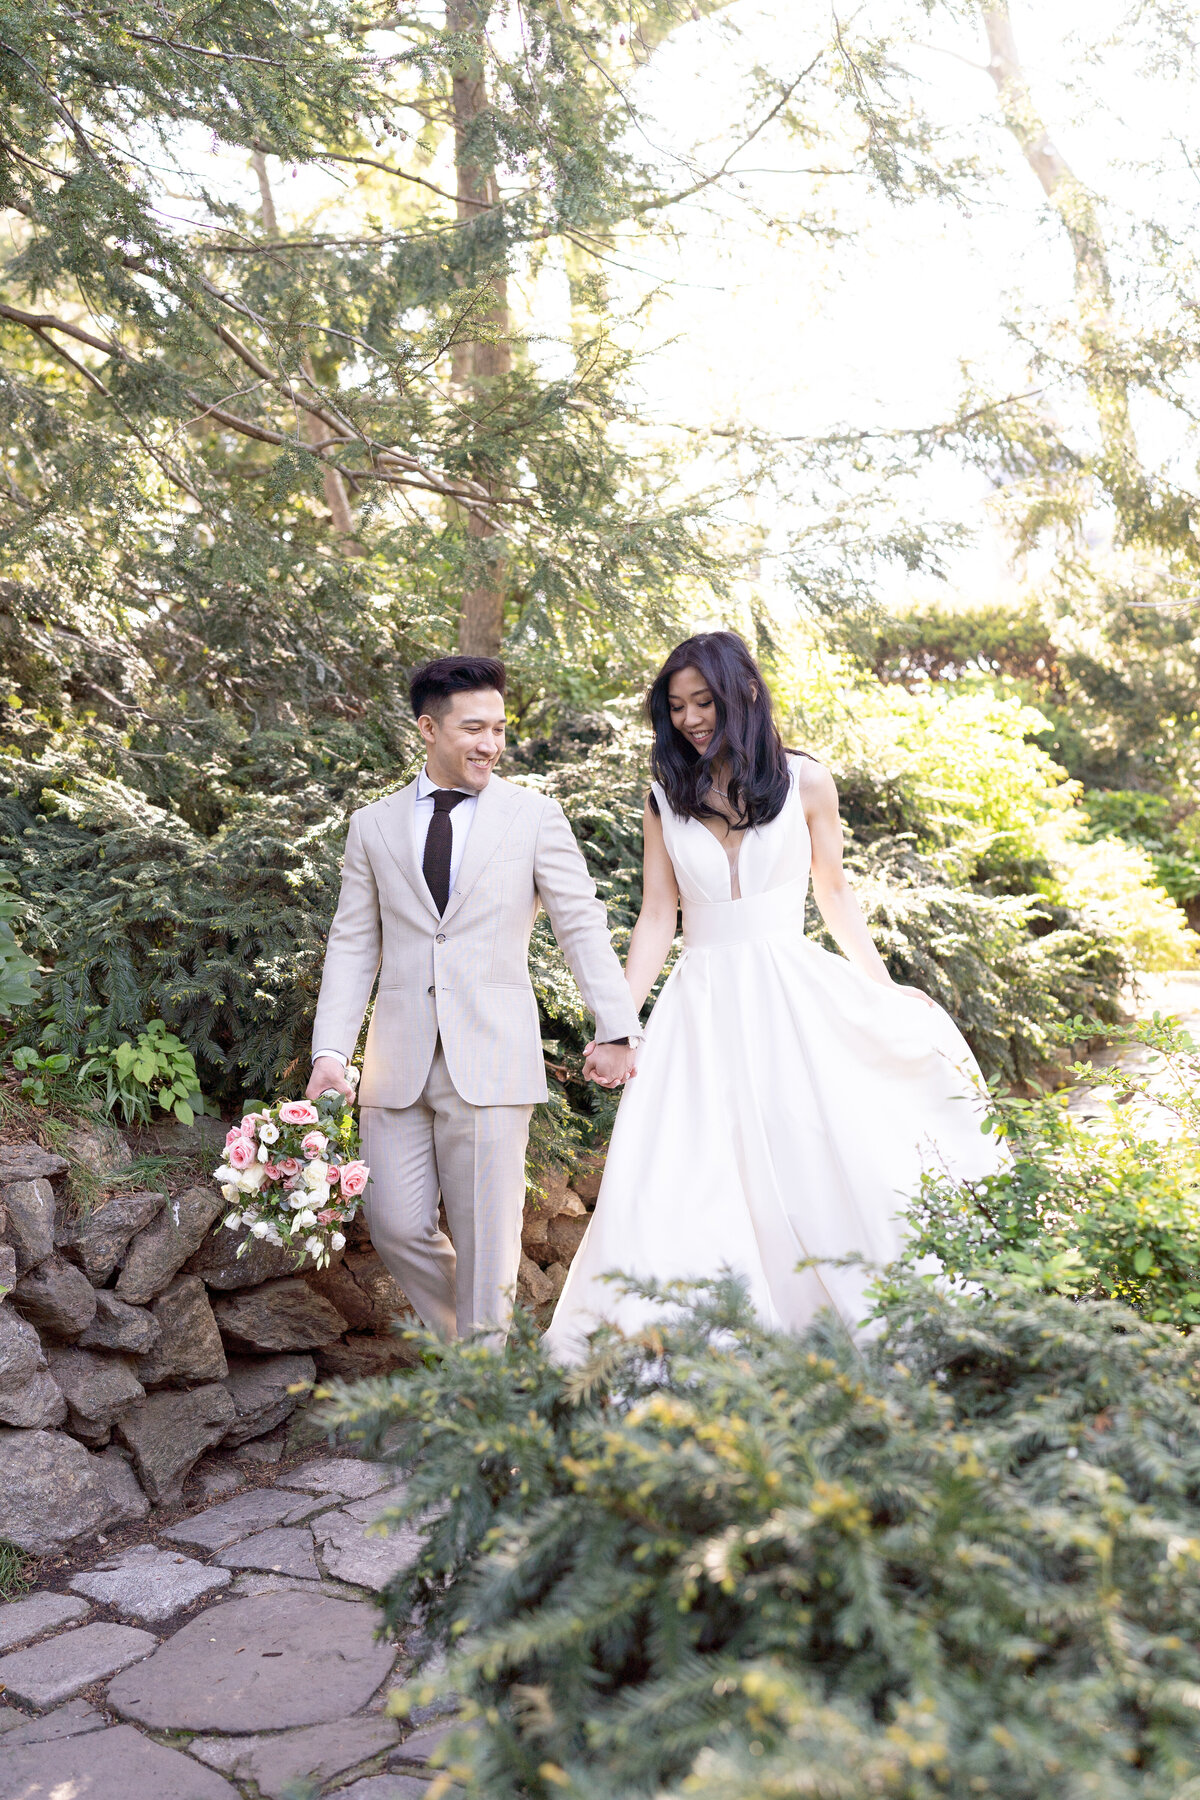 Amanda Gomez Photography - Central Park Wedding Photographer - 9